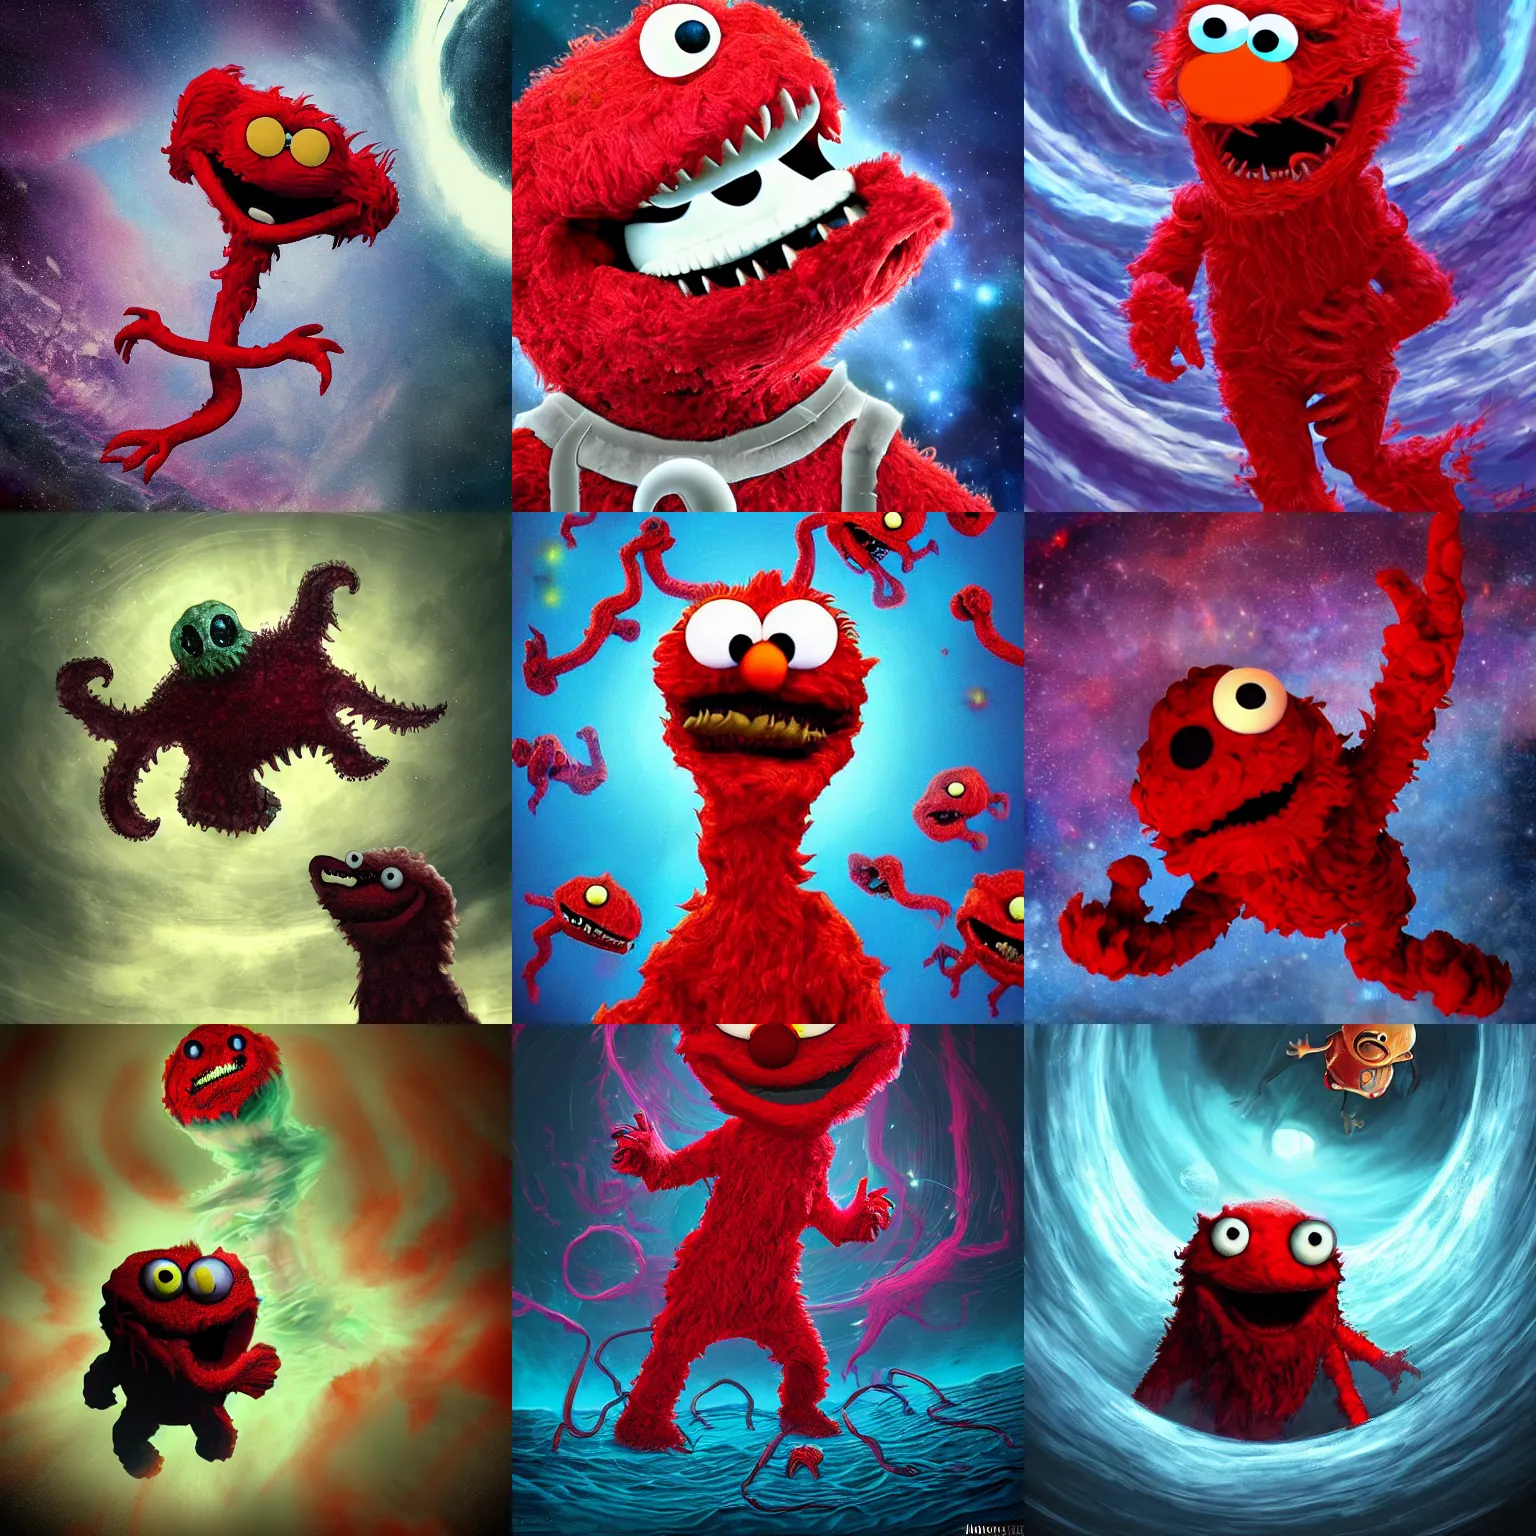 Prompt: Elmo as horrifying eldritch abomination devouring humans, floating in space, photorealistic digital art, trending on artstation